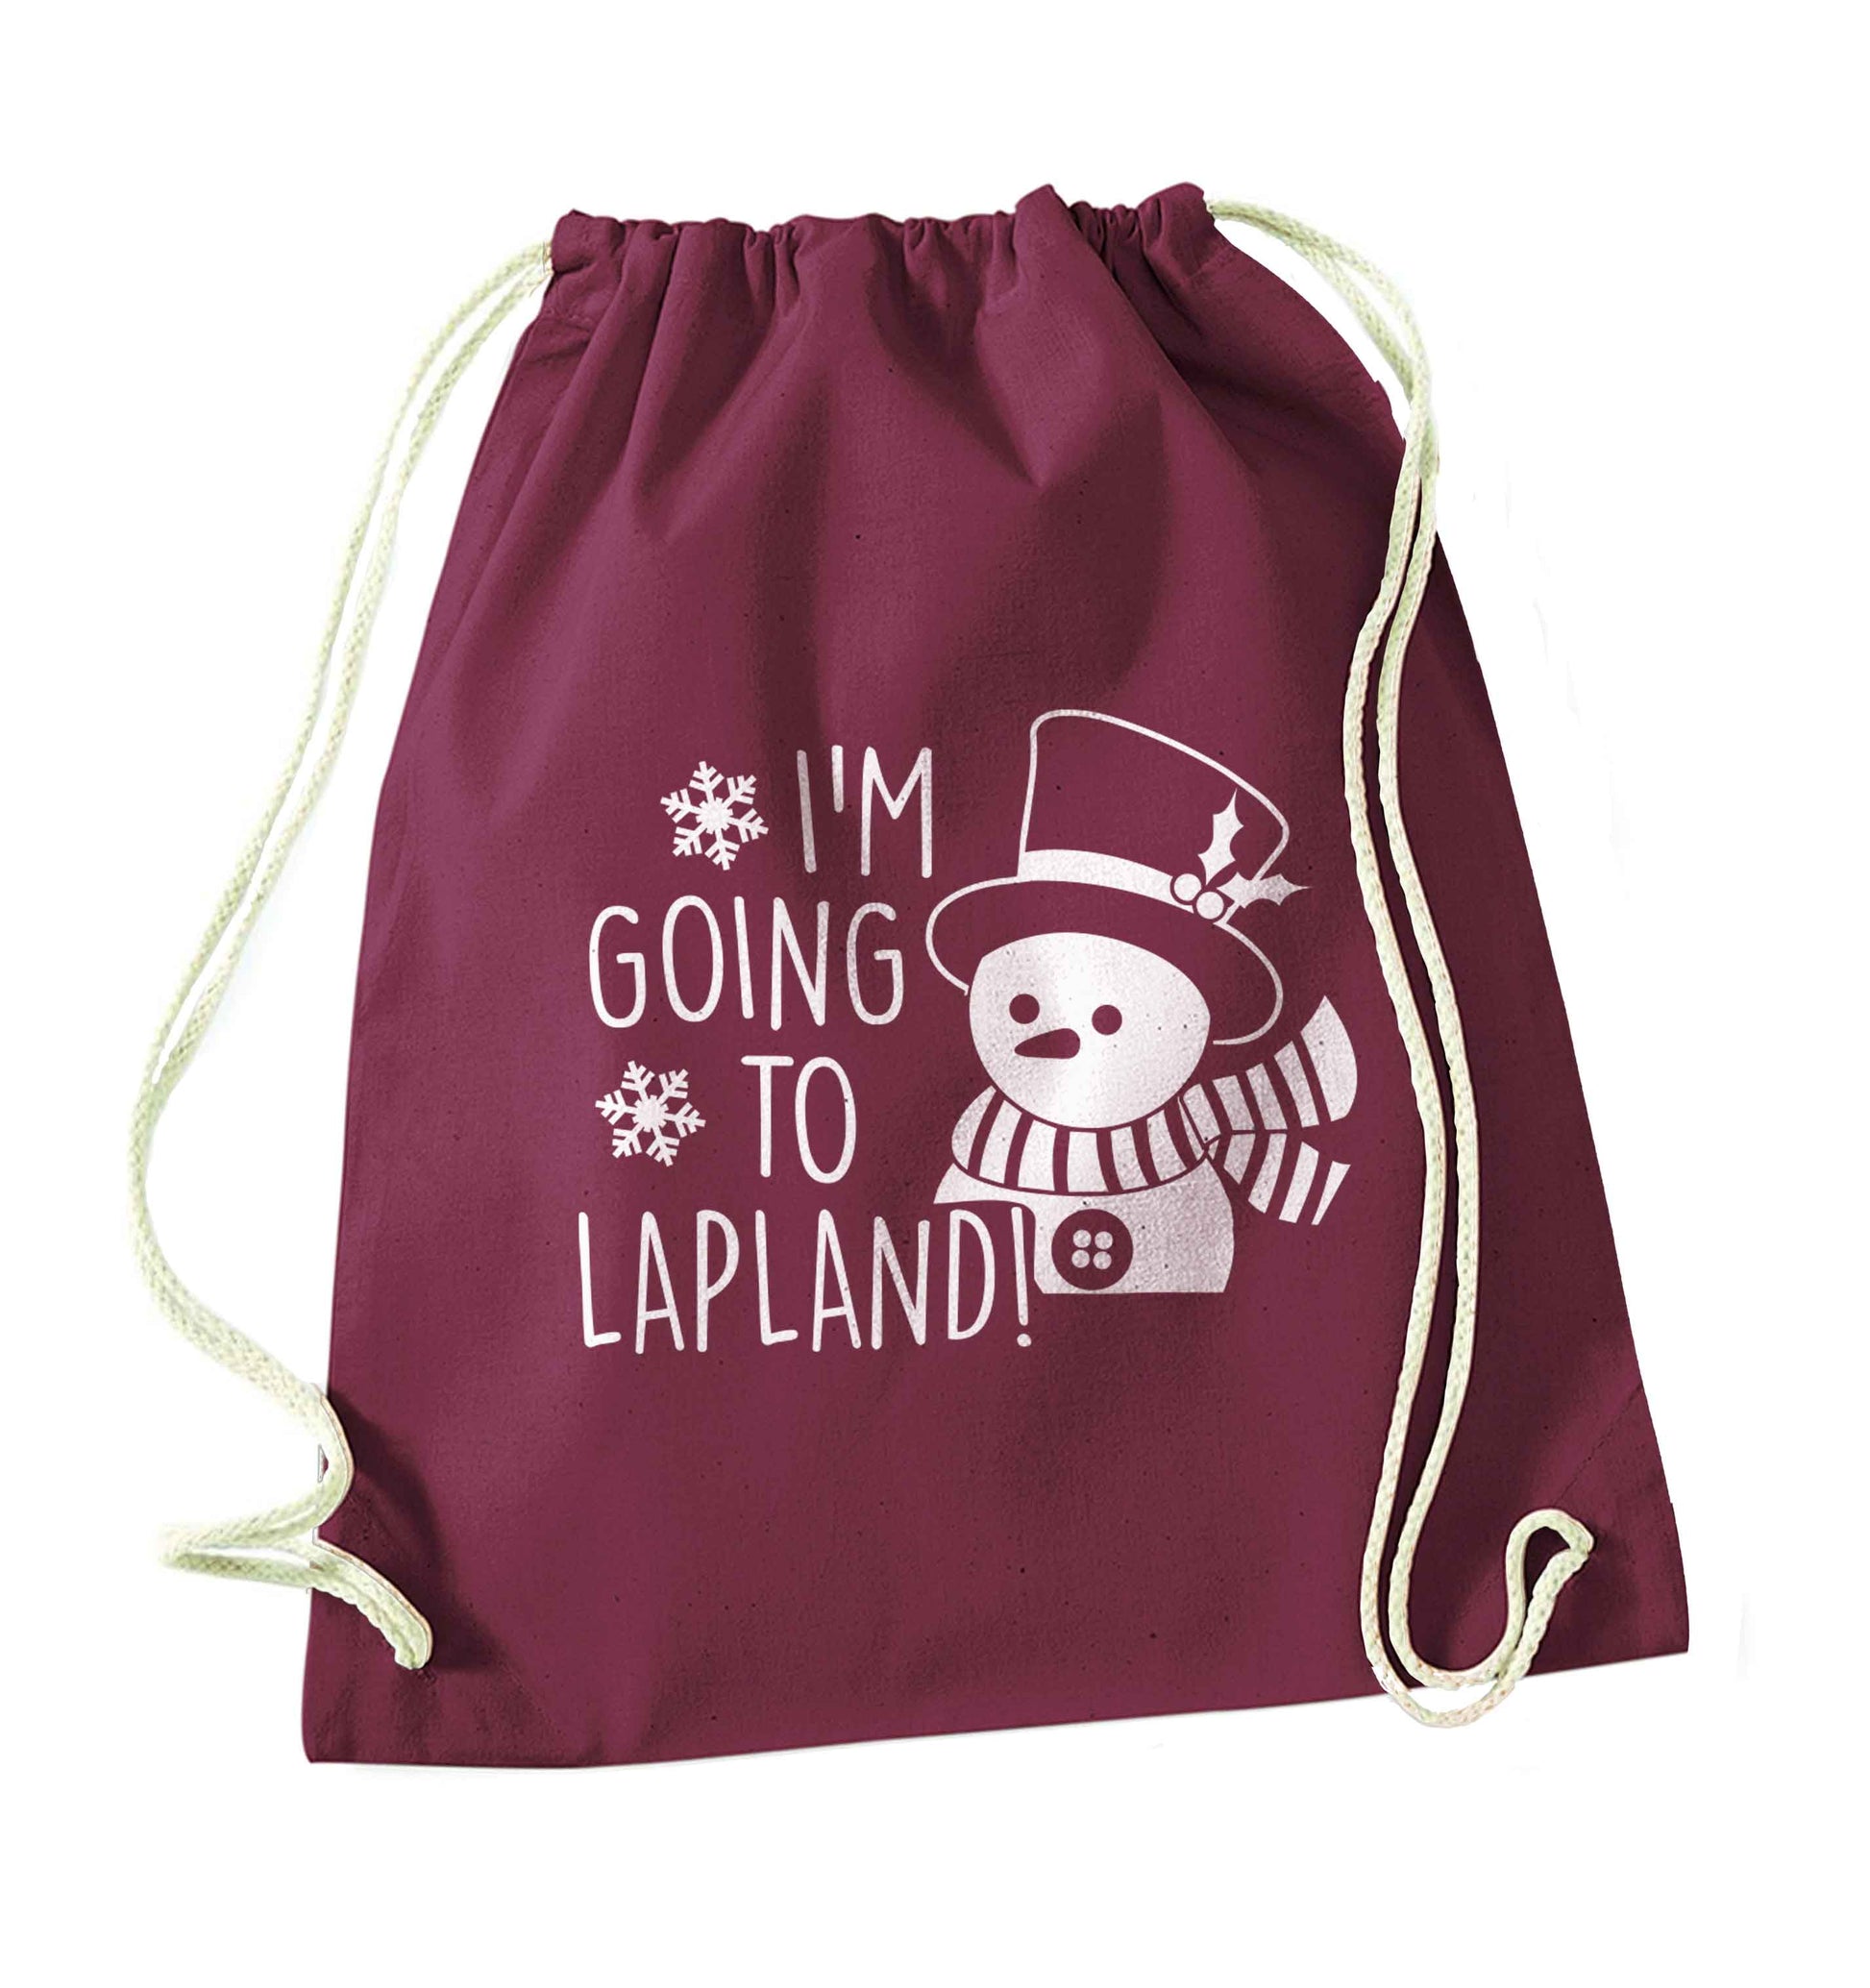 I'm going to Lapland maroon drawstring bag